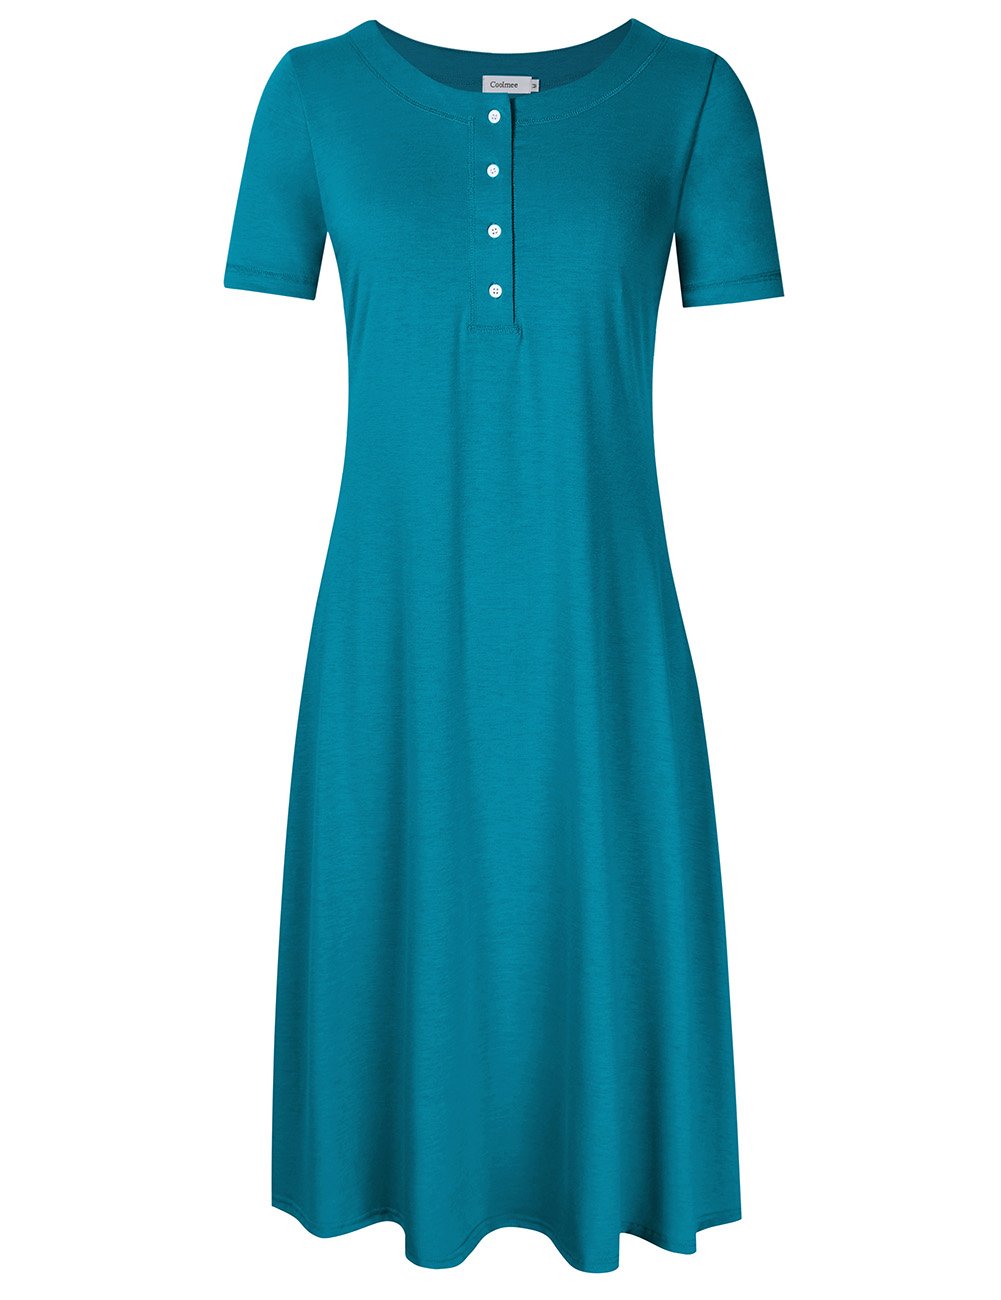 Women's Knit Cotton Long Sleeve Nightgown for Women Long Henley Sleep Dress